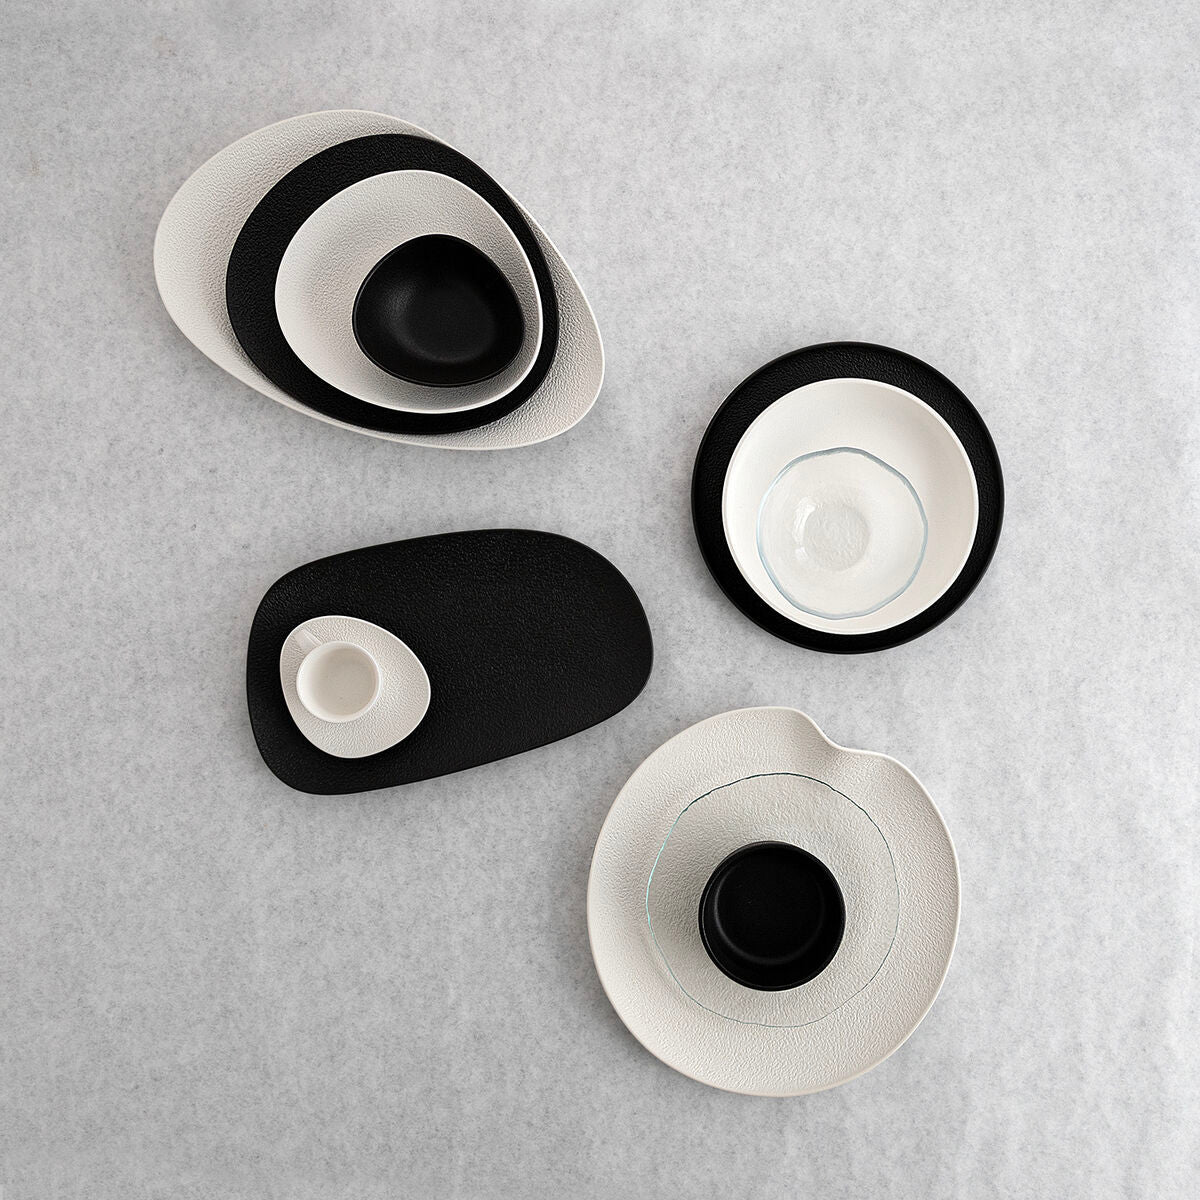 Plate Bidasoa Fosil White Ceramic Aluminium Oxide 15,8 x 13,8 x 2 cm Coffee (8 Units)